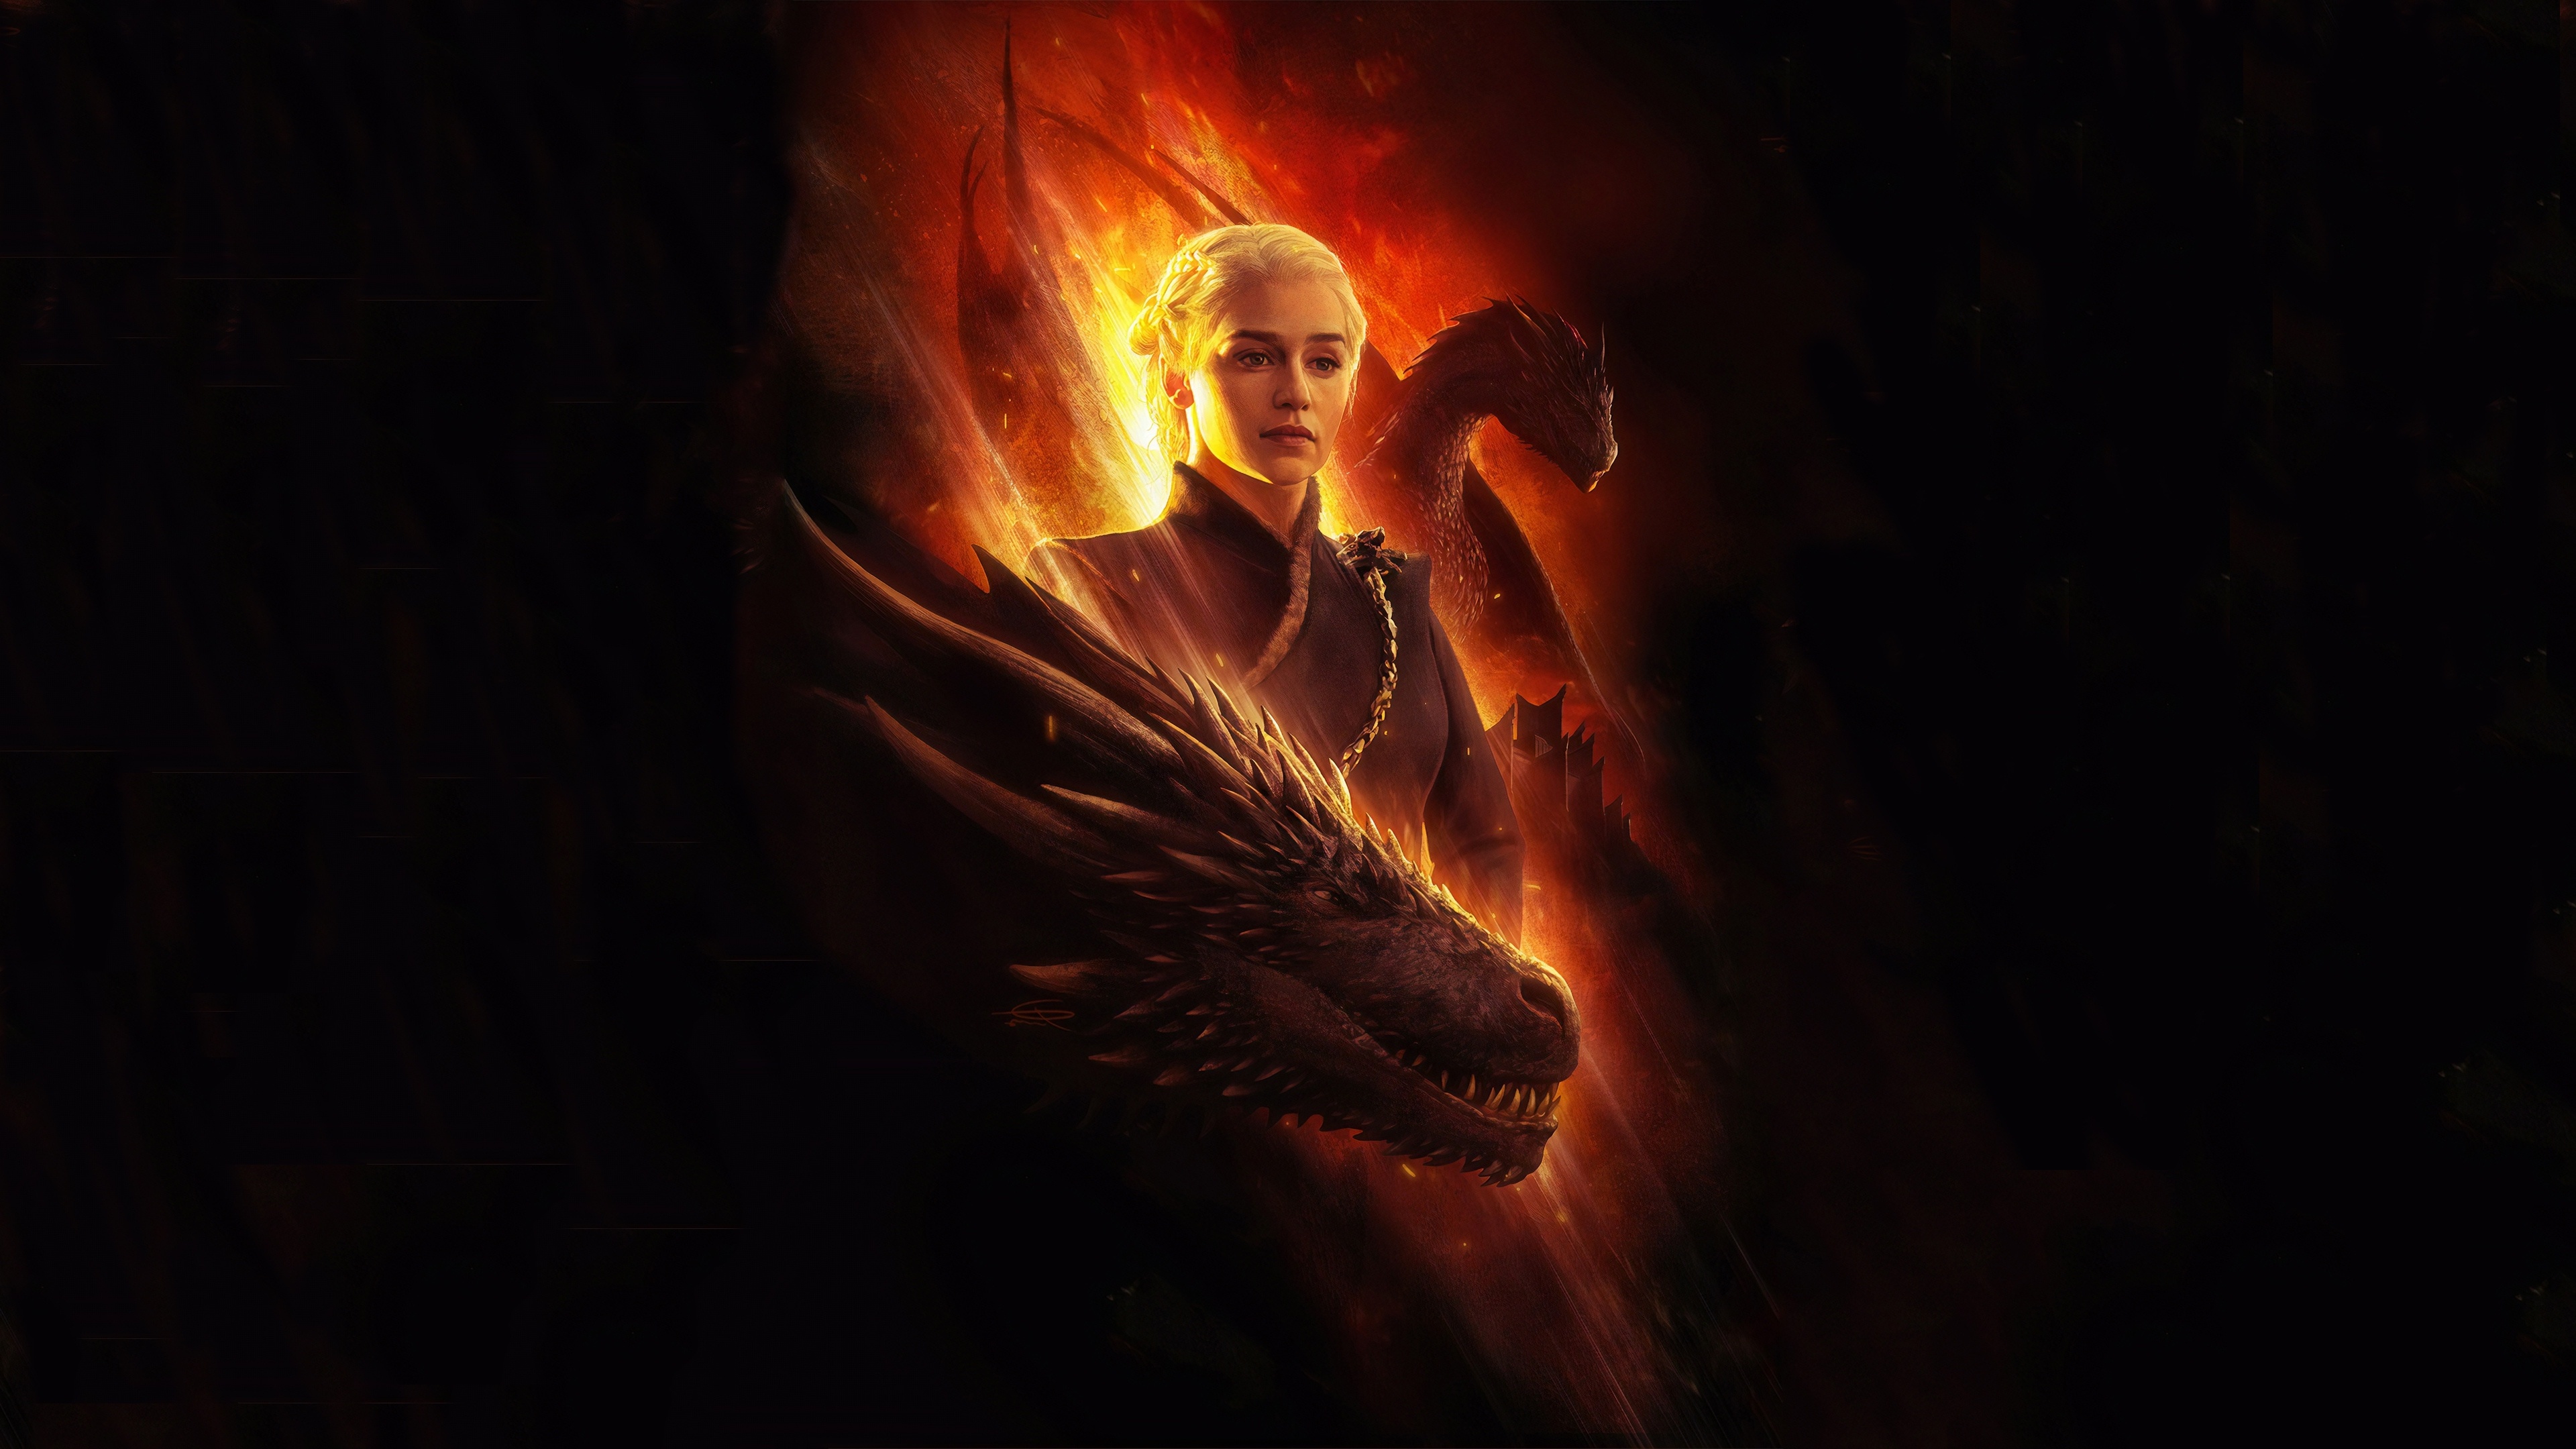 House Targaryen, Game of Thrones wallpaper, Daenerys Targaryen, Artistic portrayal, 3840x2160 4K Desktop